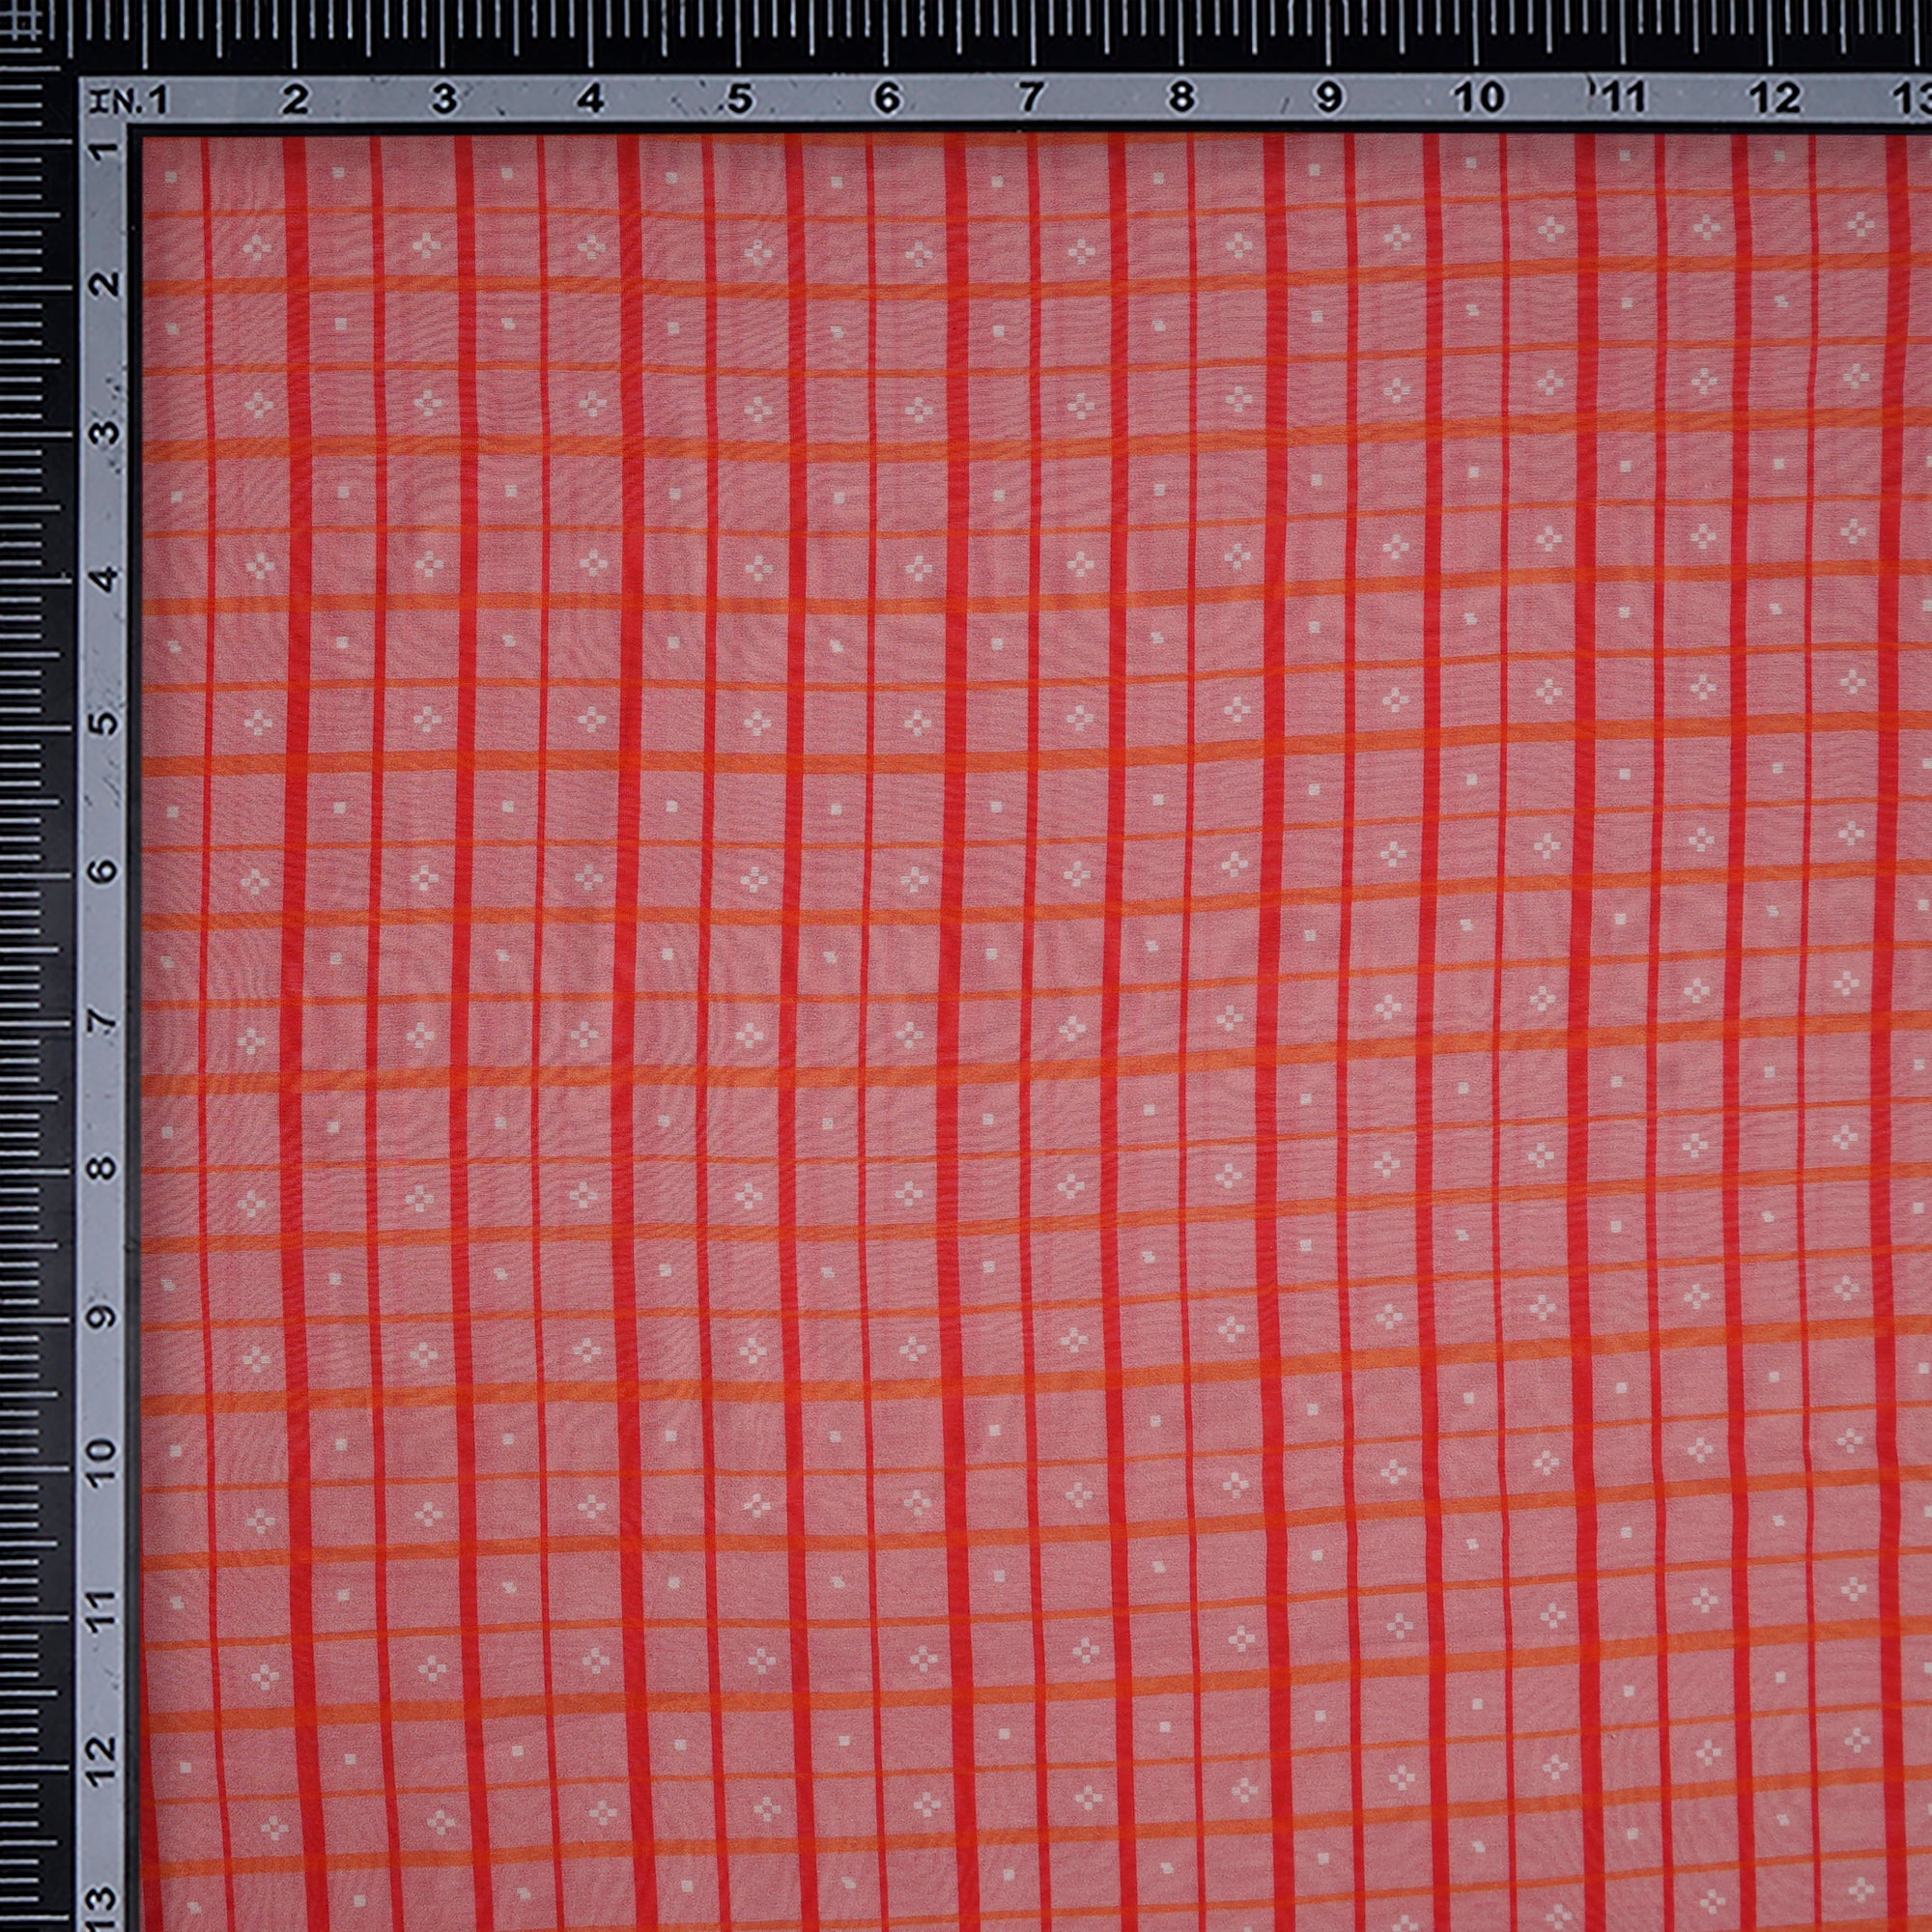 Peach Color Digital Printed Chanderi Fabric